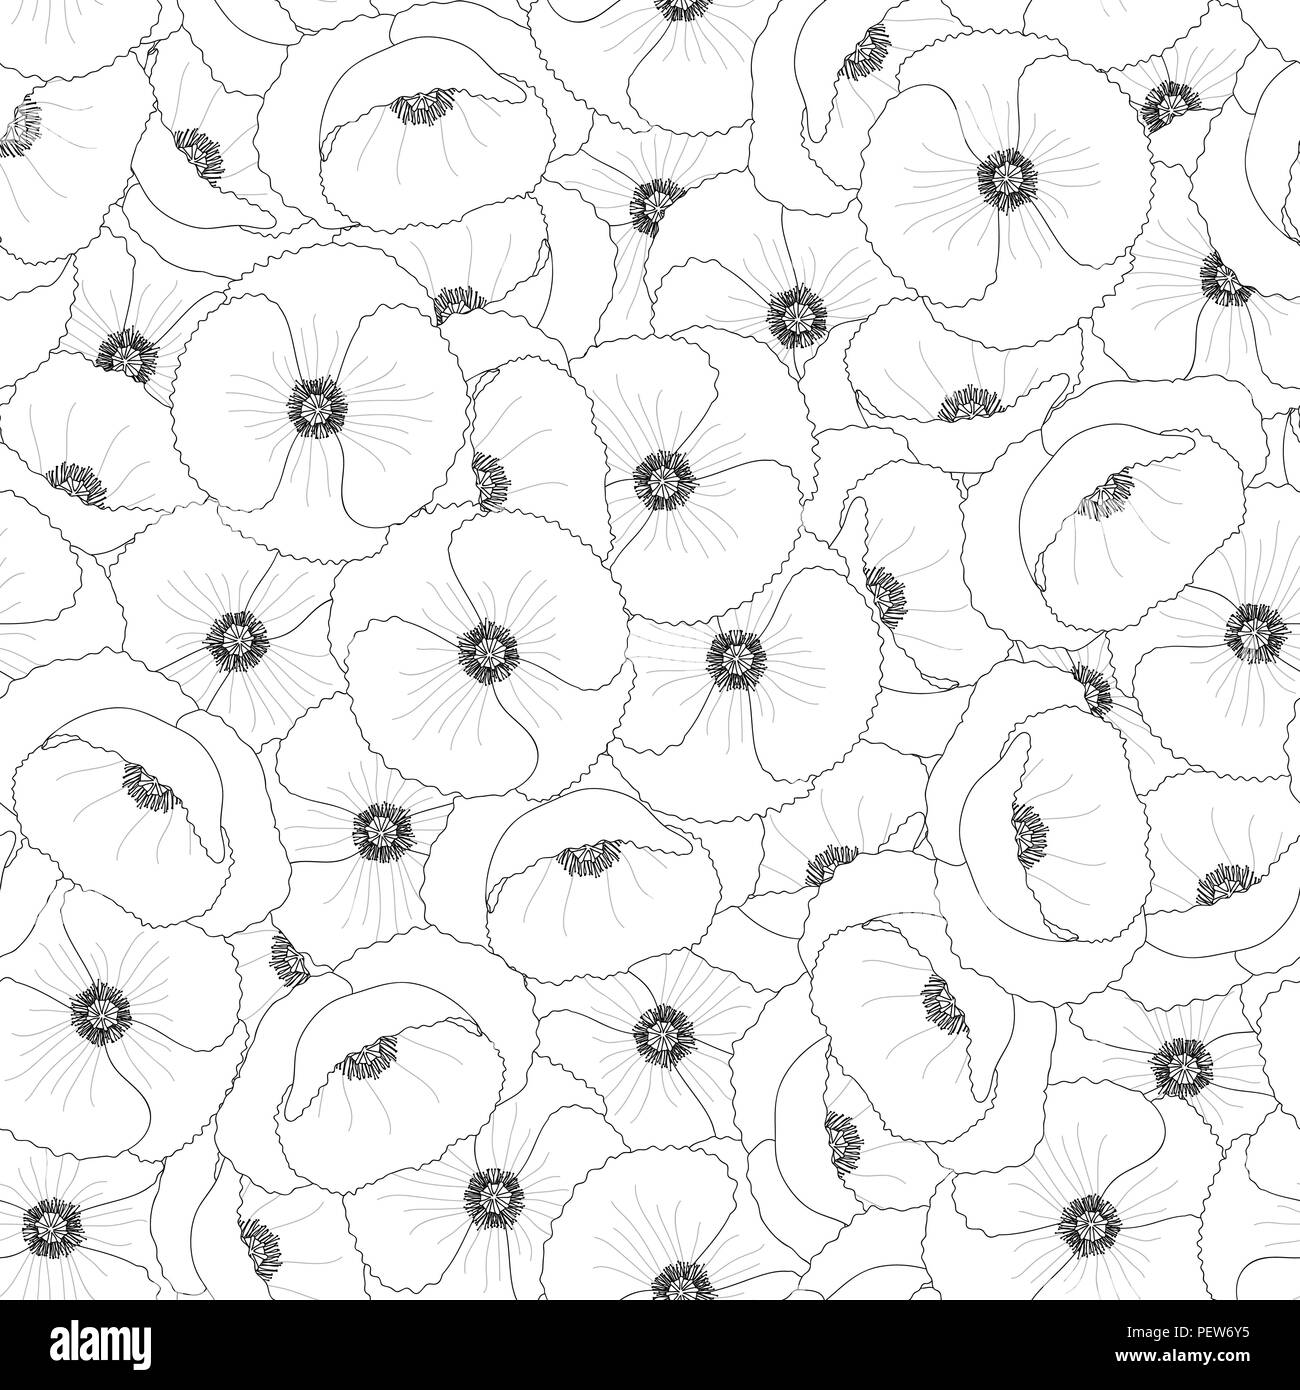 Papaver rhoeas Outline Seamless Background or common poppy,corn poppy,corn rose,field poppy,Flanders poppy or red poppy. Vector Illustration. Stock Vector